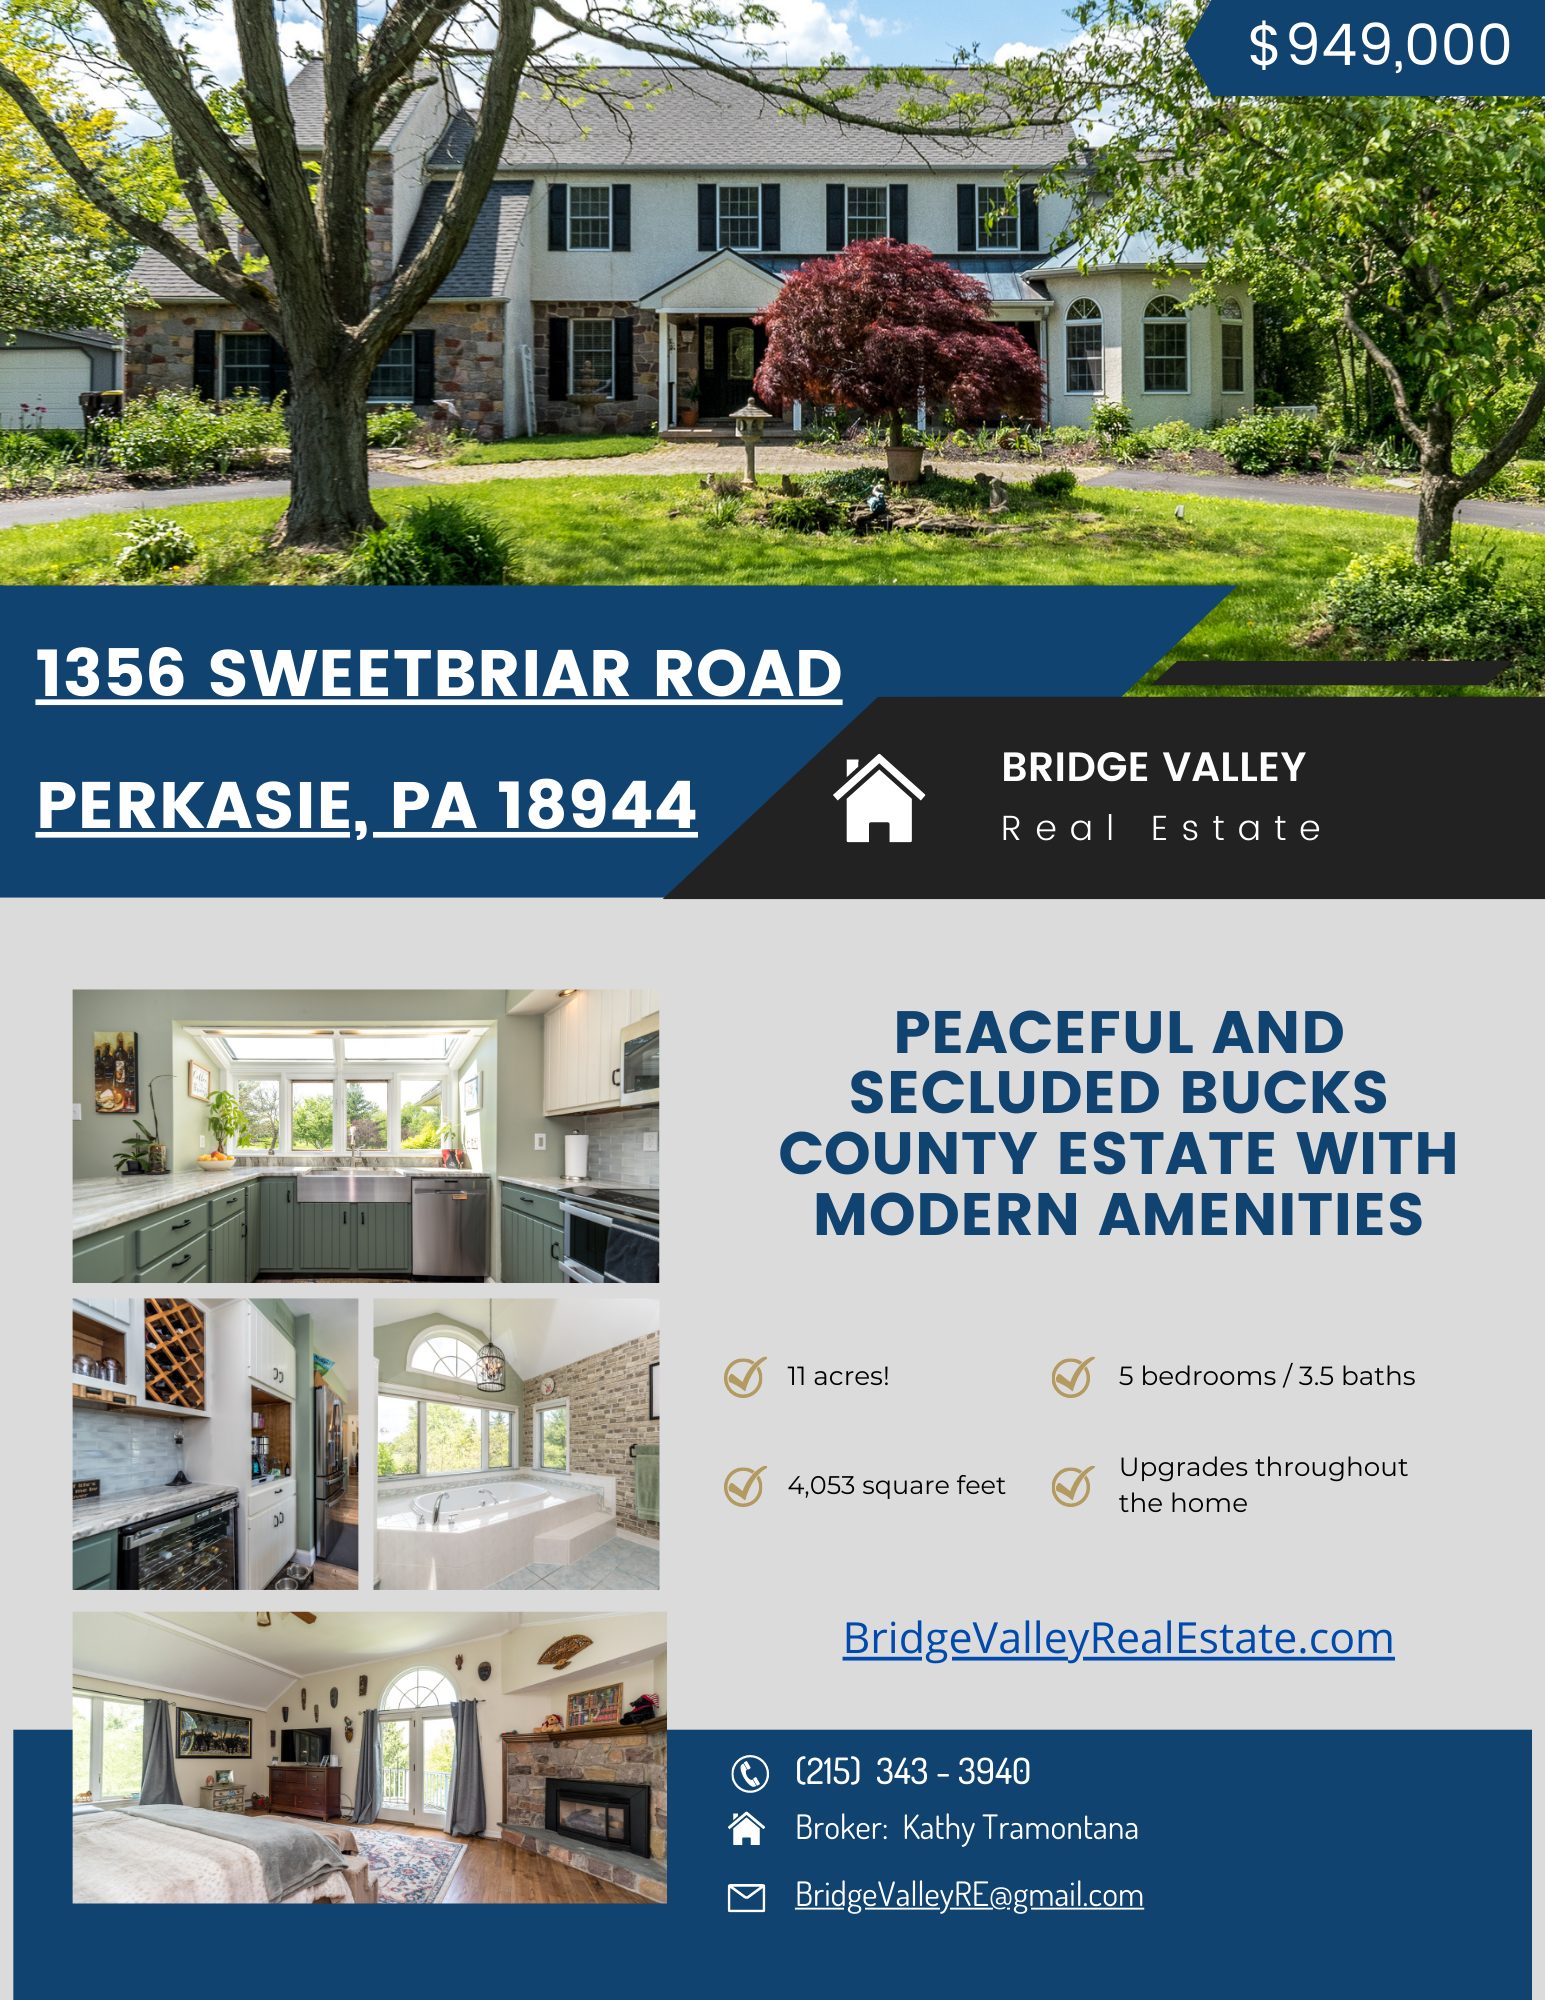 Bridge Valley Real Estate, LLC 2795 York Rd, Jamison Pennsylvania 18929